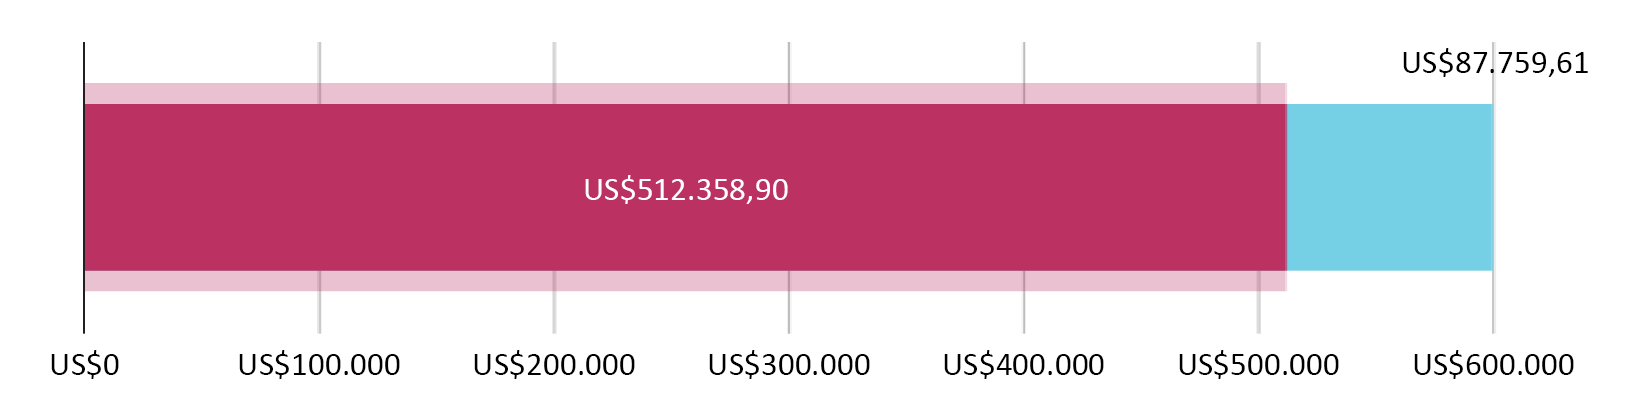 US$512.358,90 donados; US$87.759,61 restantes